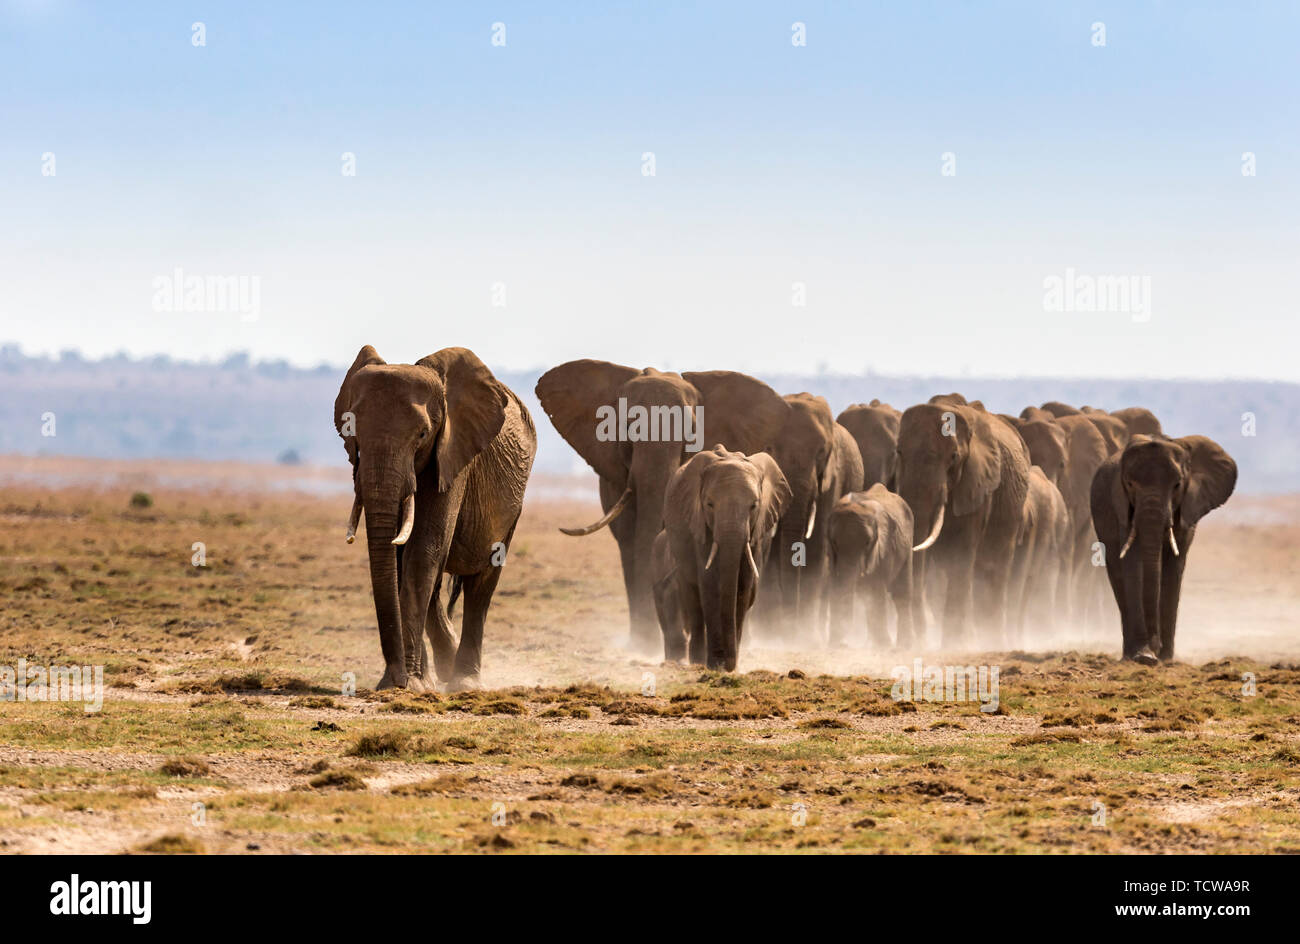 Elephants on African grasslands. African elephants, East Africa, Kenya, Amboseli National Park Stock Photo